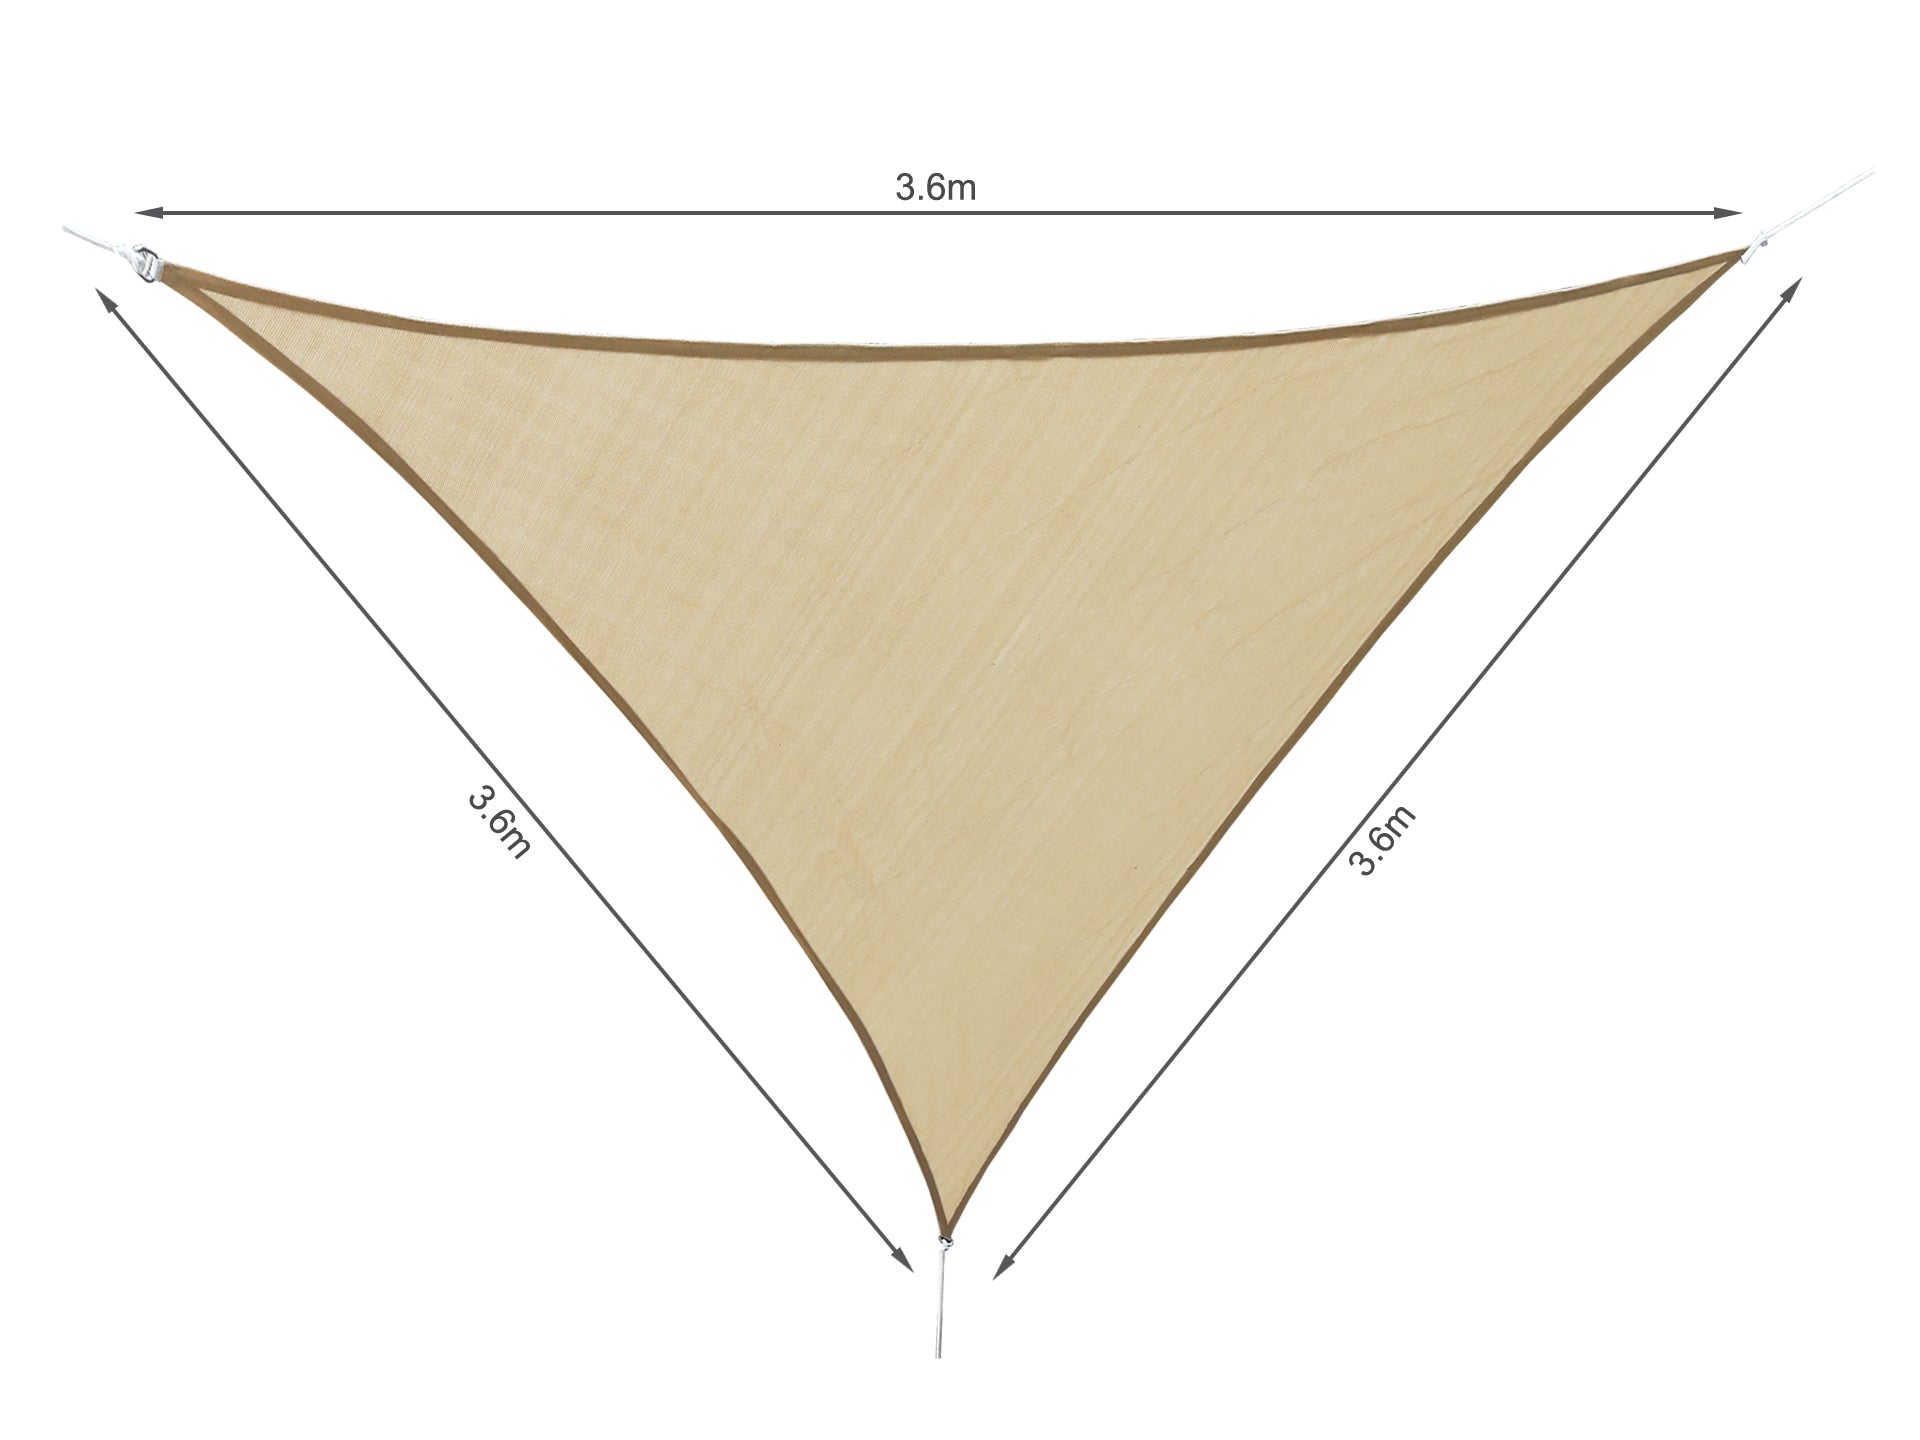 TOUGHOUT Kool Triangle Shade Sail 3.6m x 3.6m x 3.6m - SAND